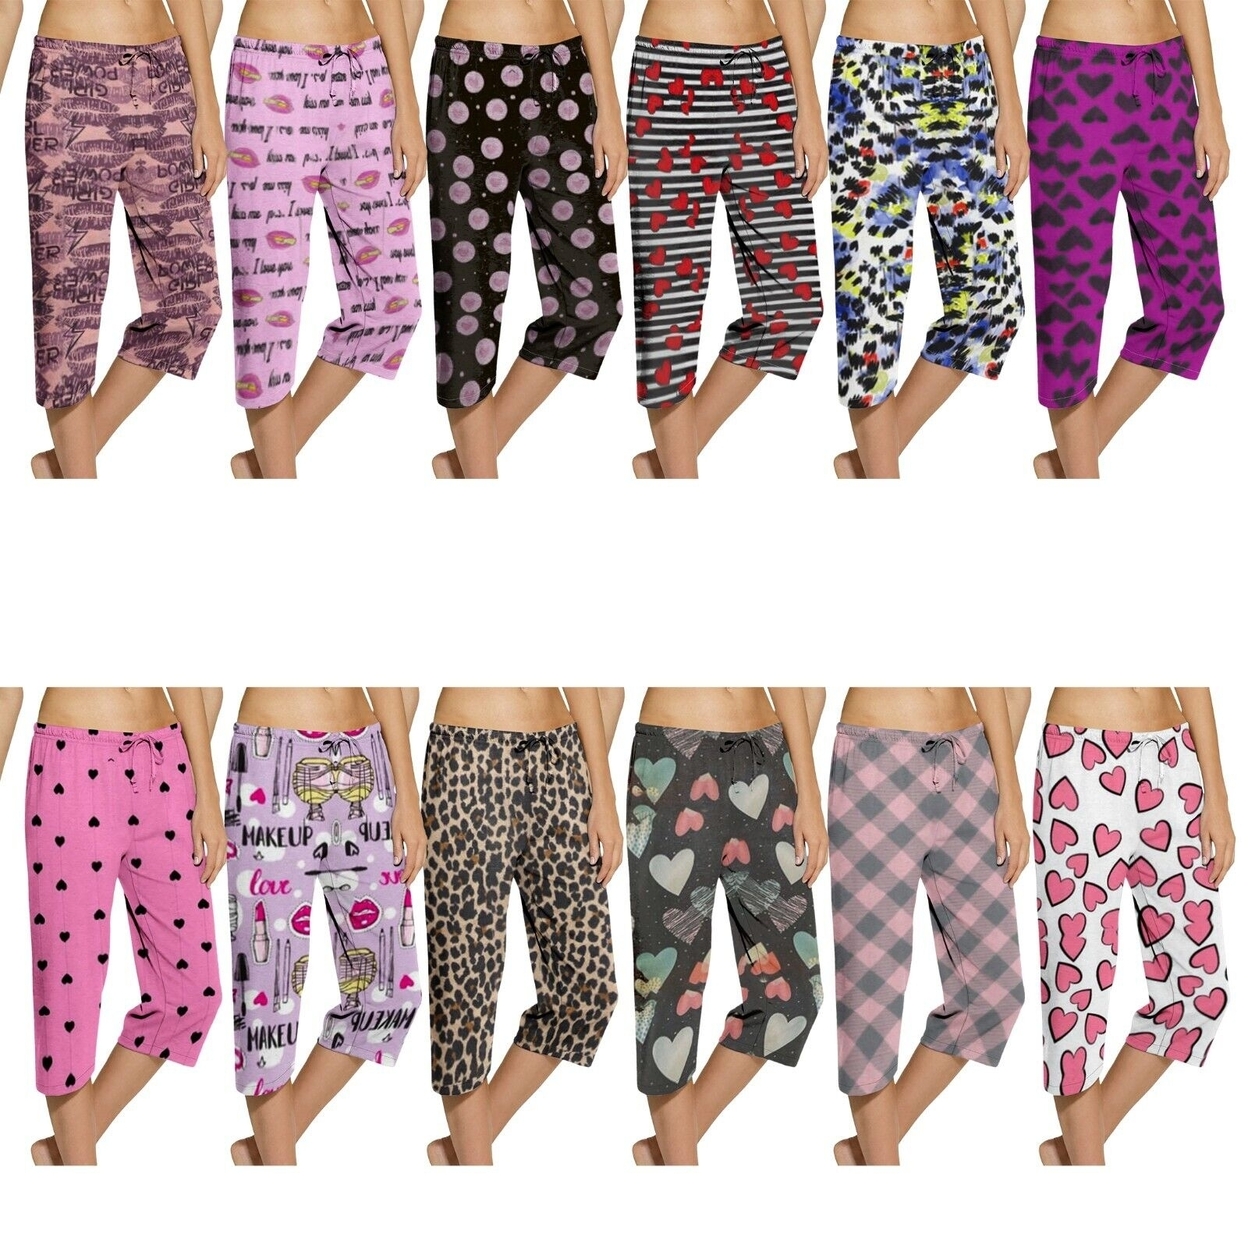 4-Pack: Women's Ultra-Soft Cozy Terry Knit Comfy Capri Sleepwear Pajama Bottoms - Small, Love